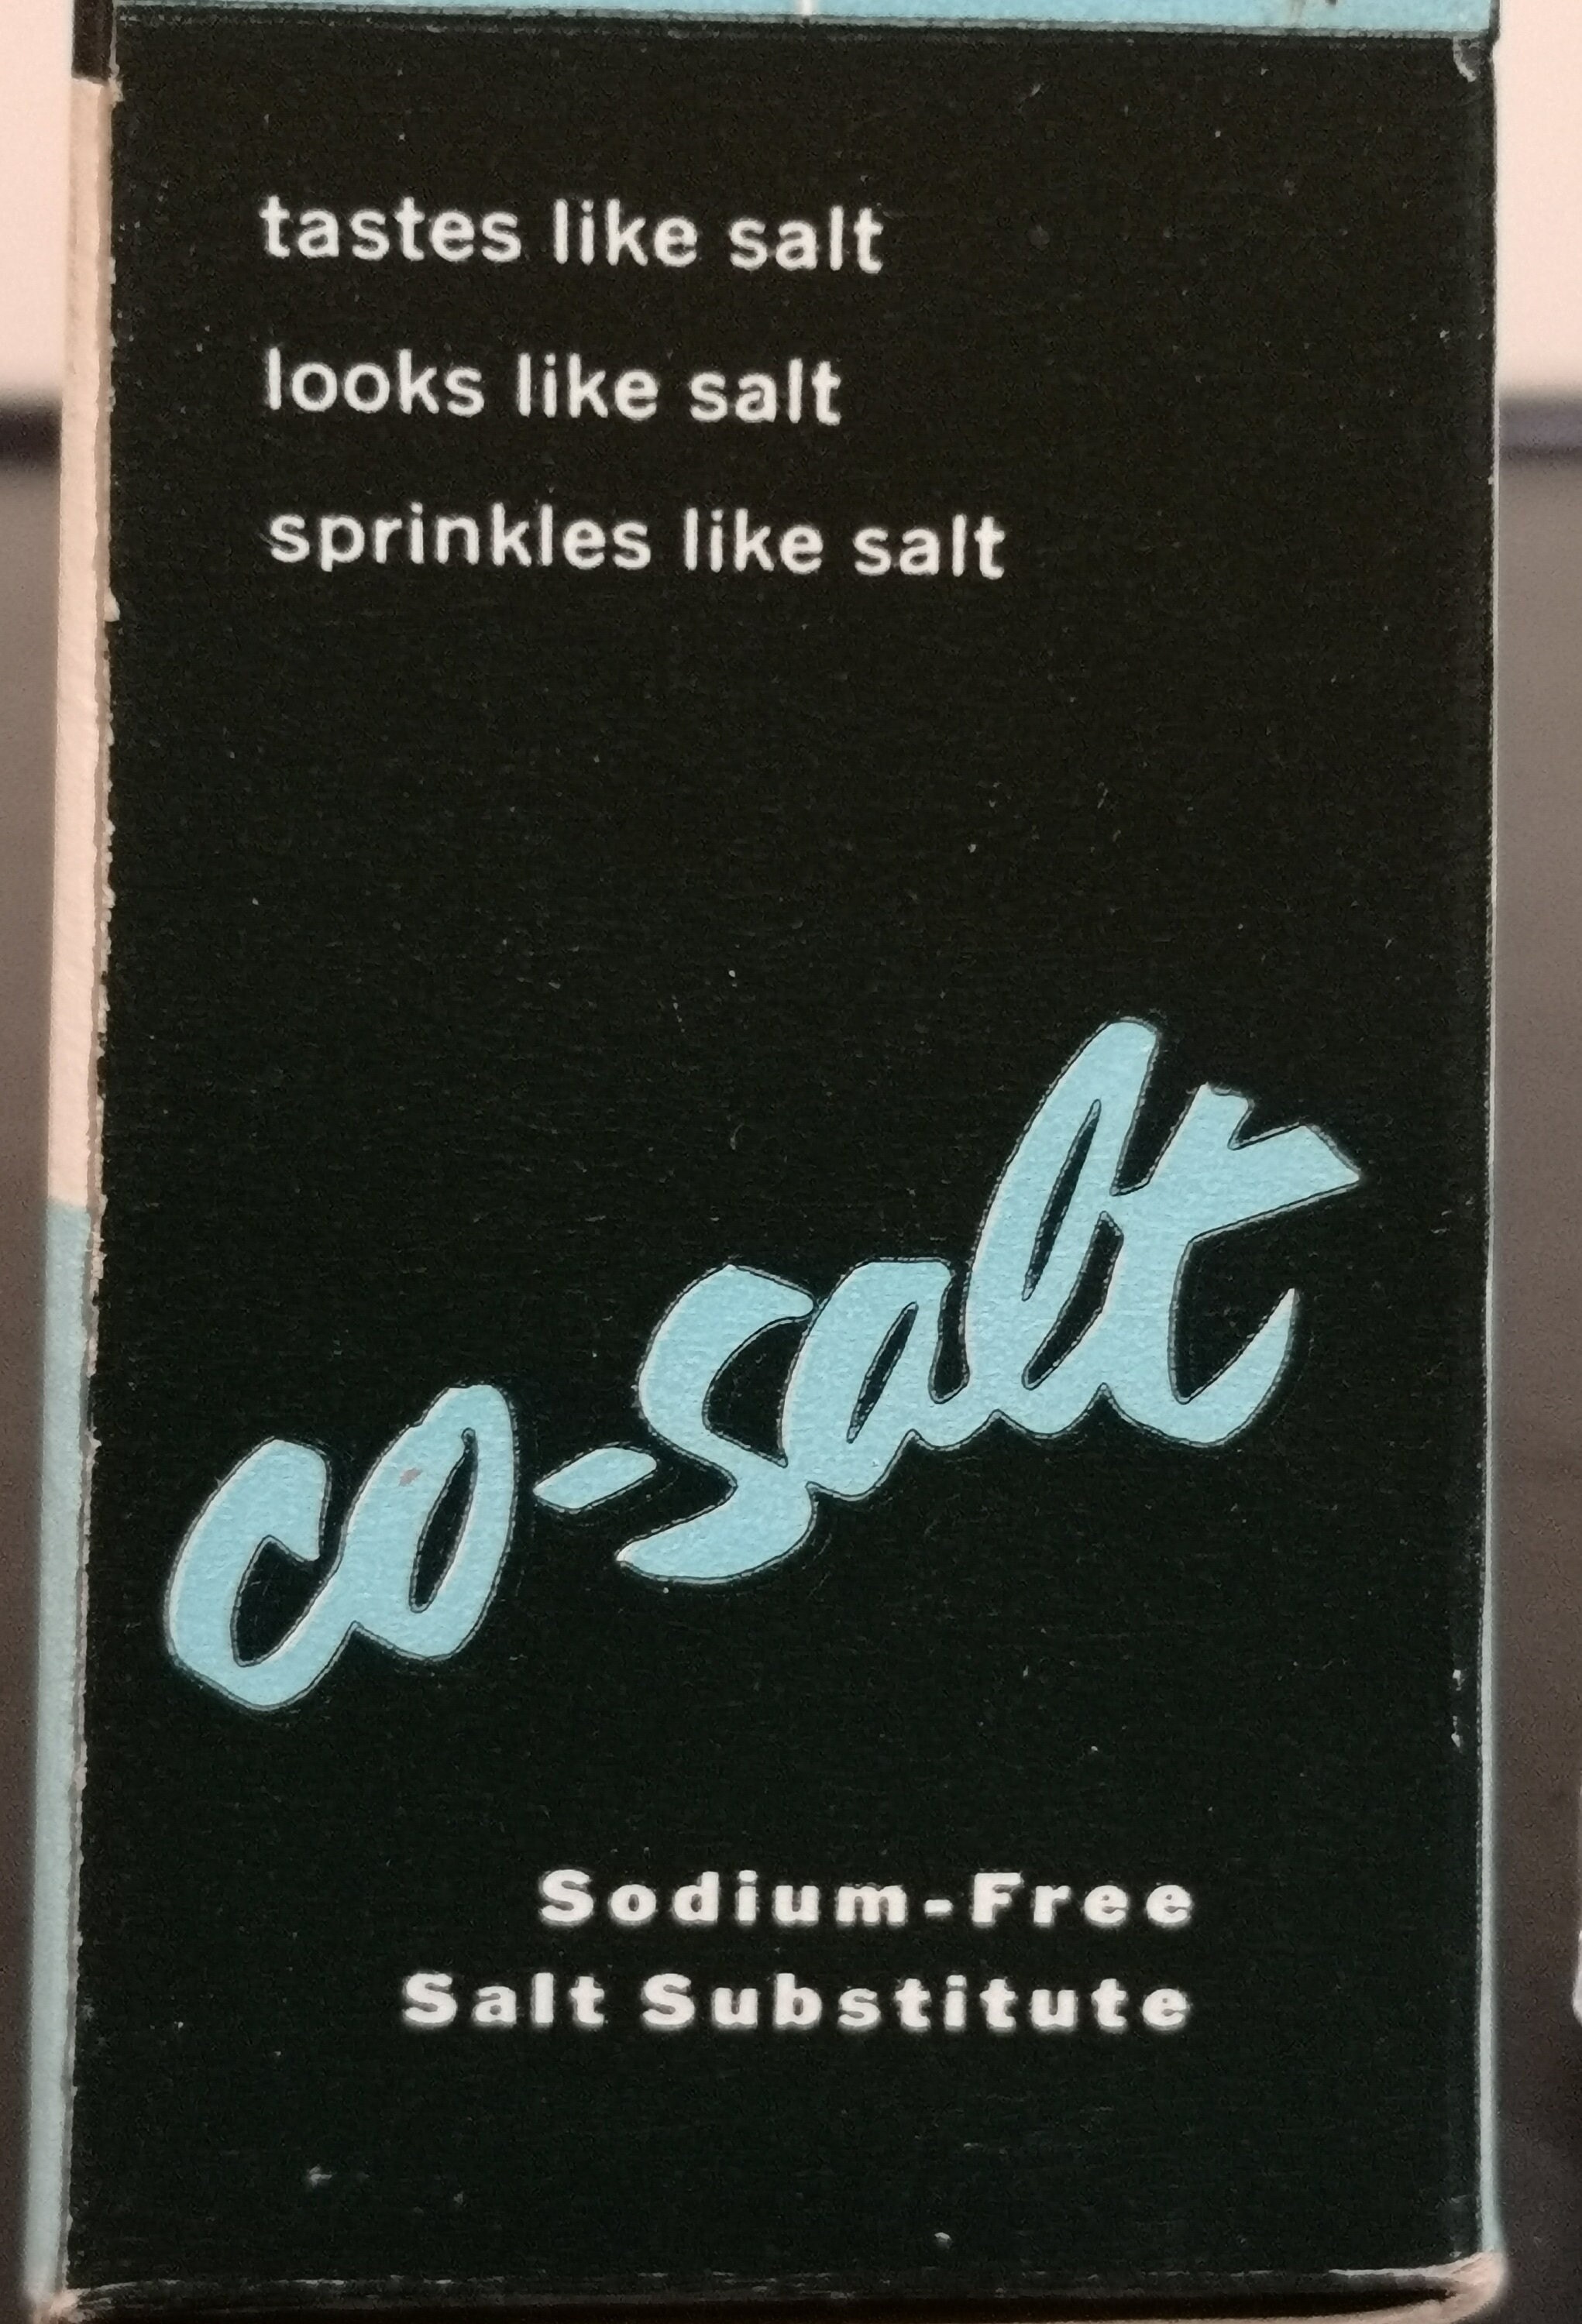 Vintage Co-salt Sodium Free Salt Substitute Lot of 2 NOS 